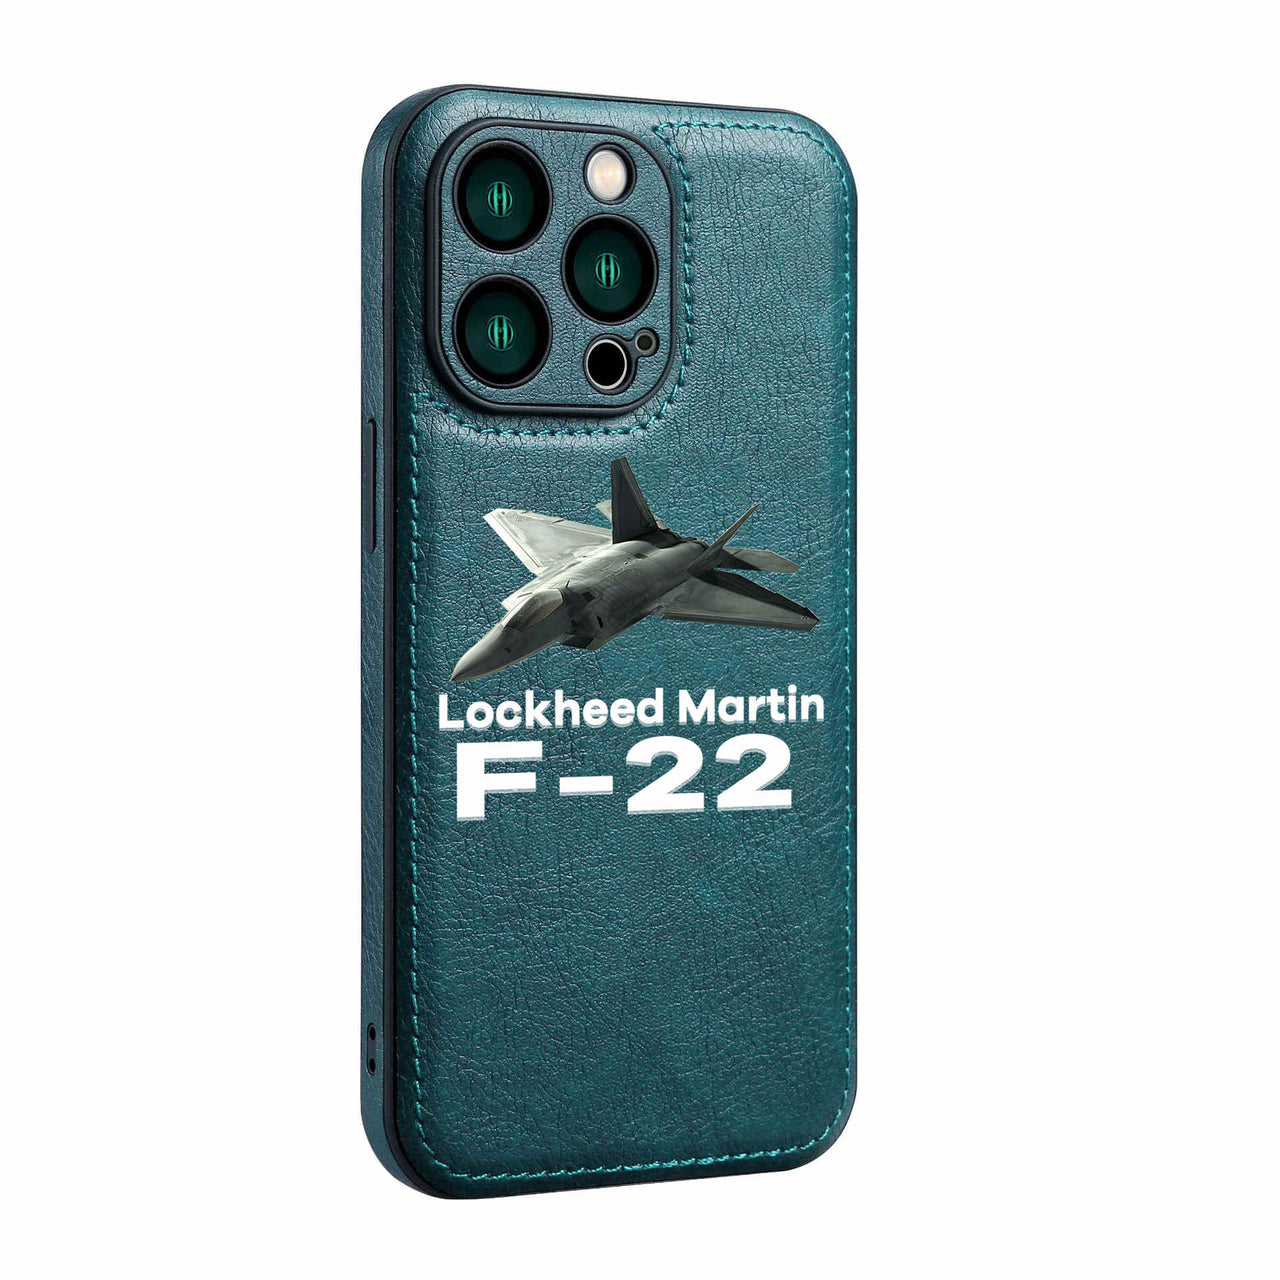 The Lockheed Martin F22 Designed Leather iPhone Cases